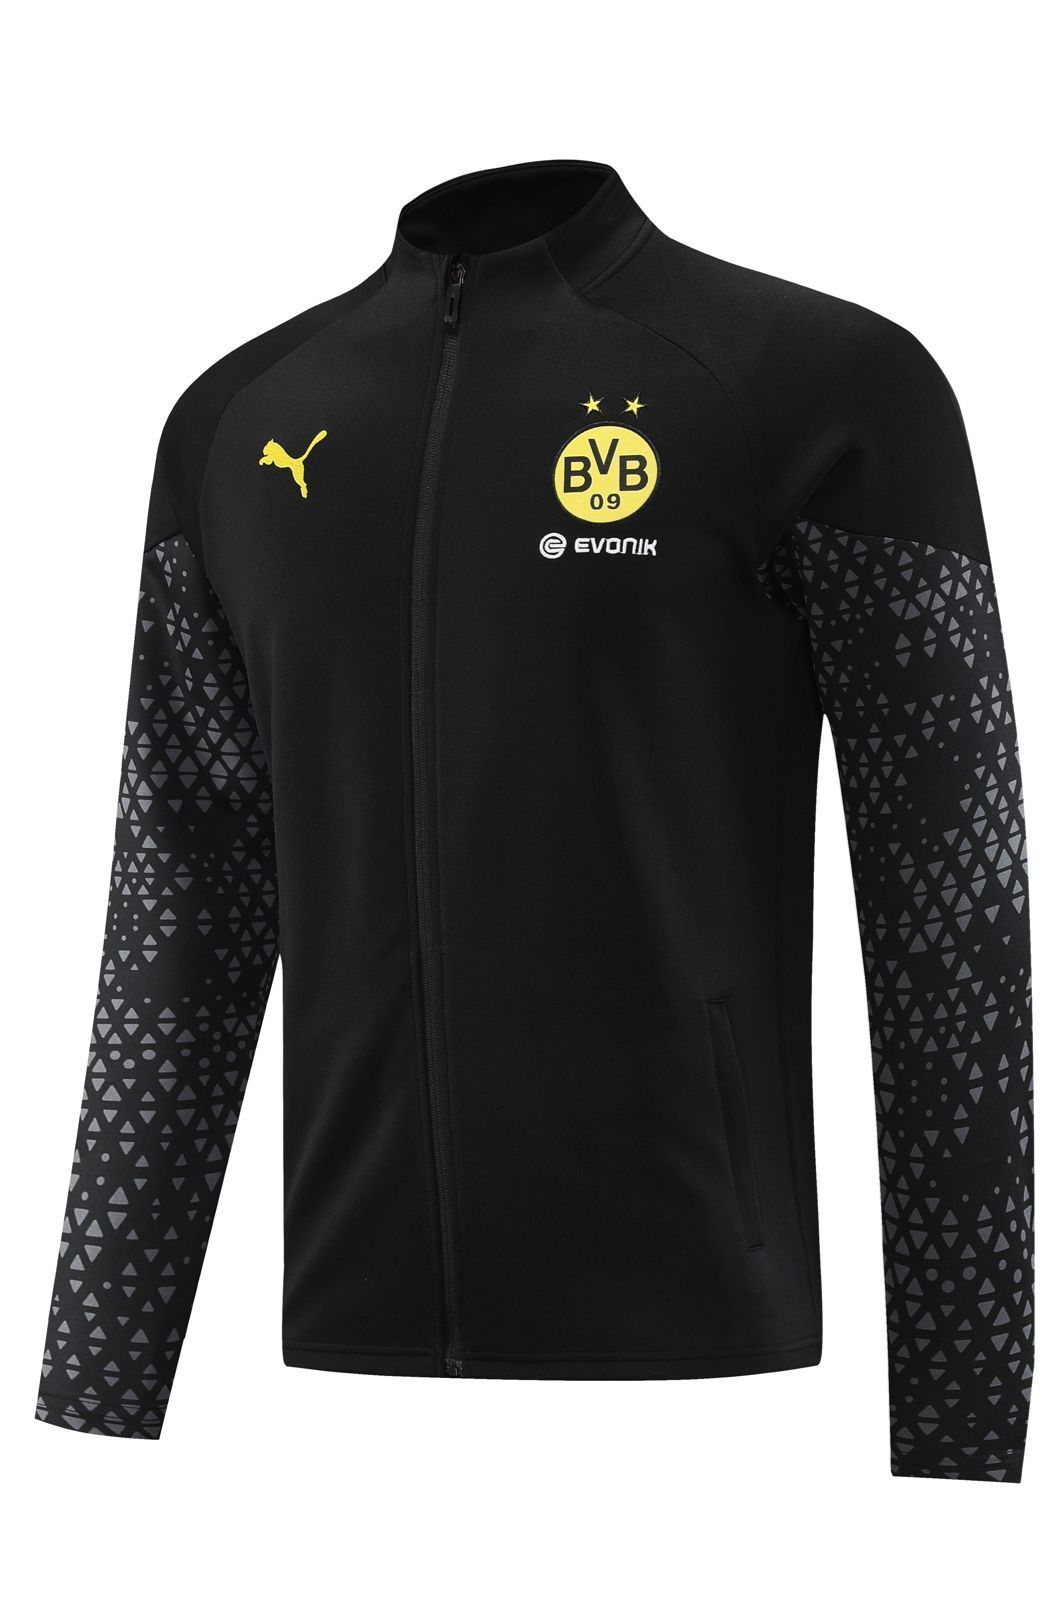 Borussia Dortmund Black Winter Jacket 23 24 Season